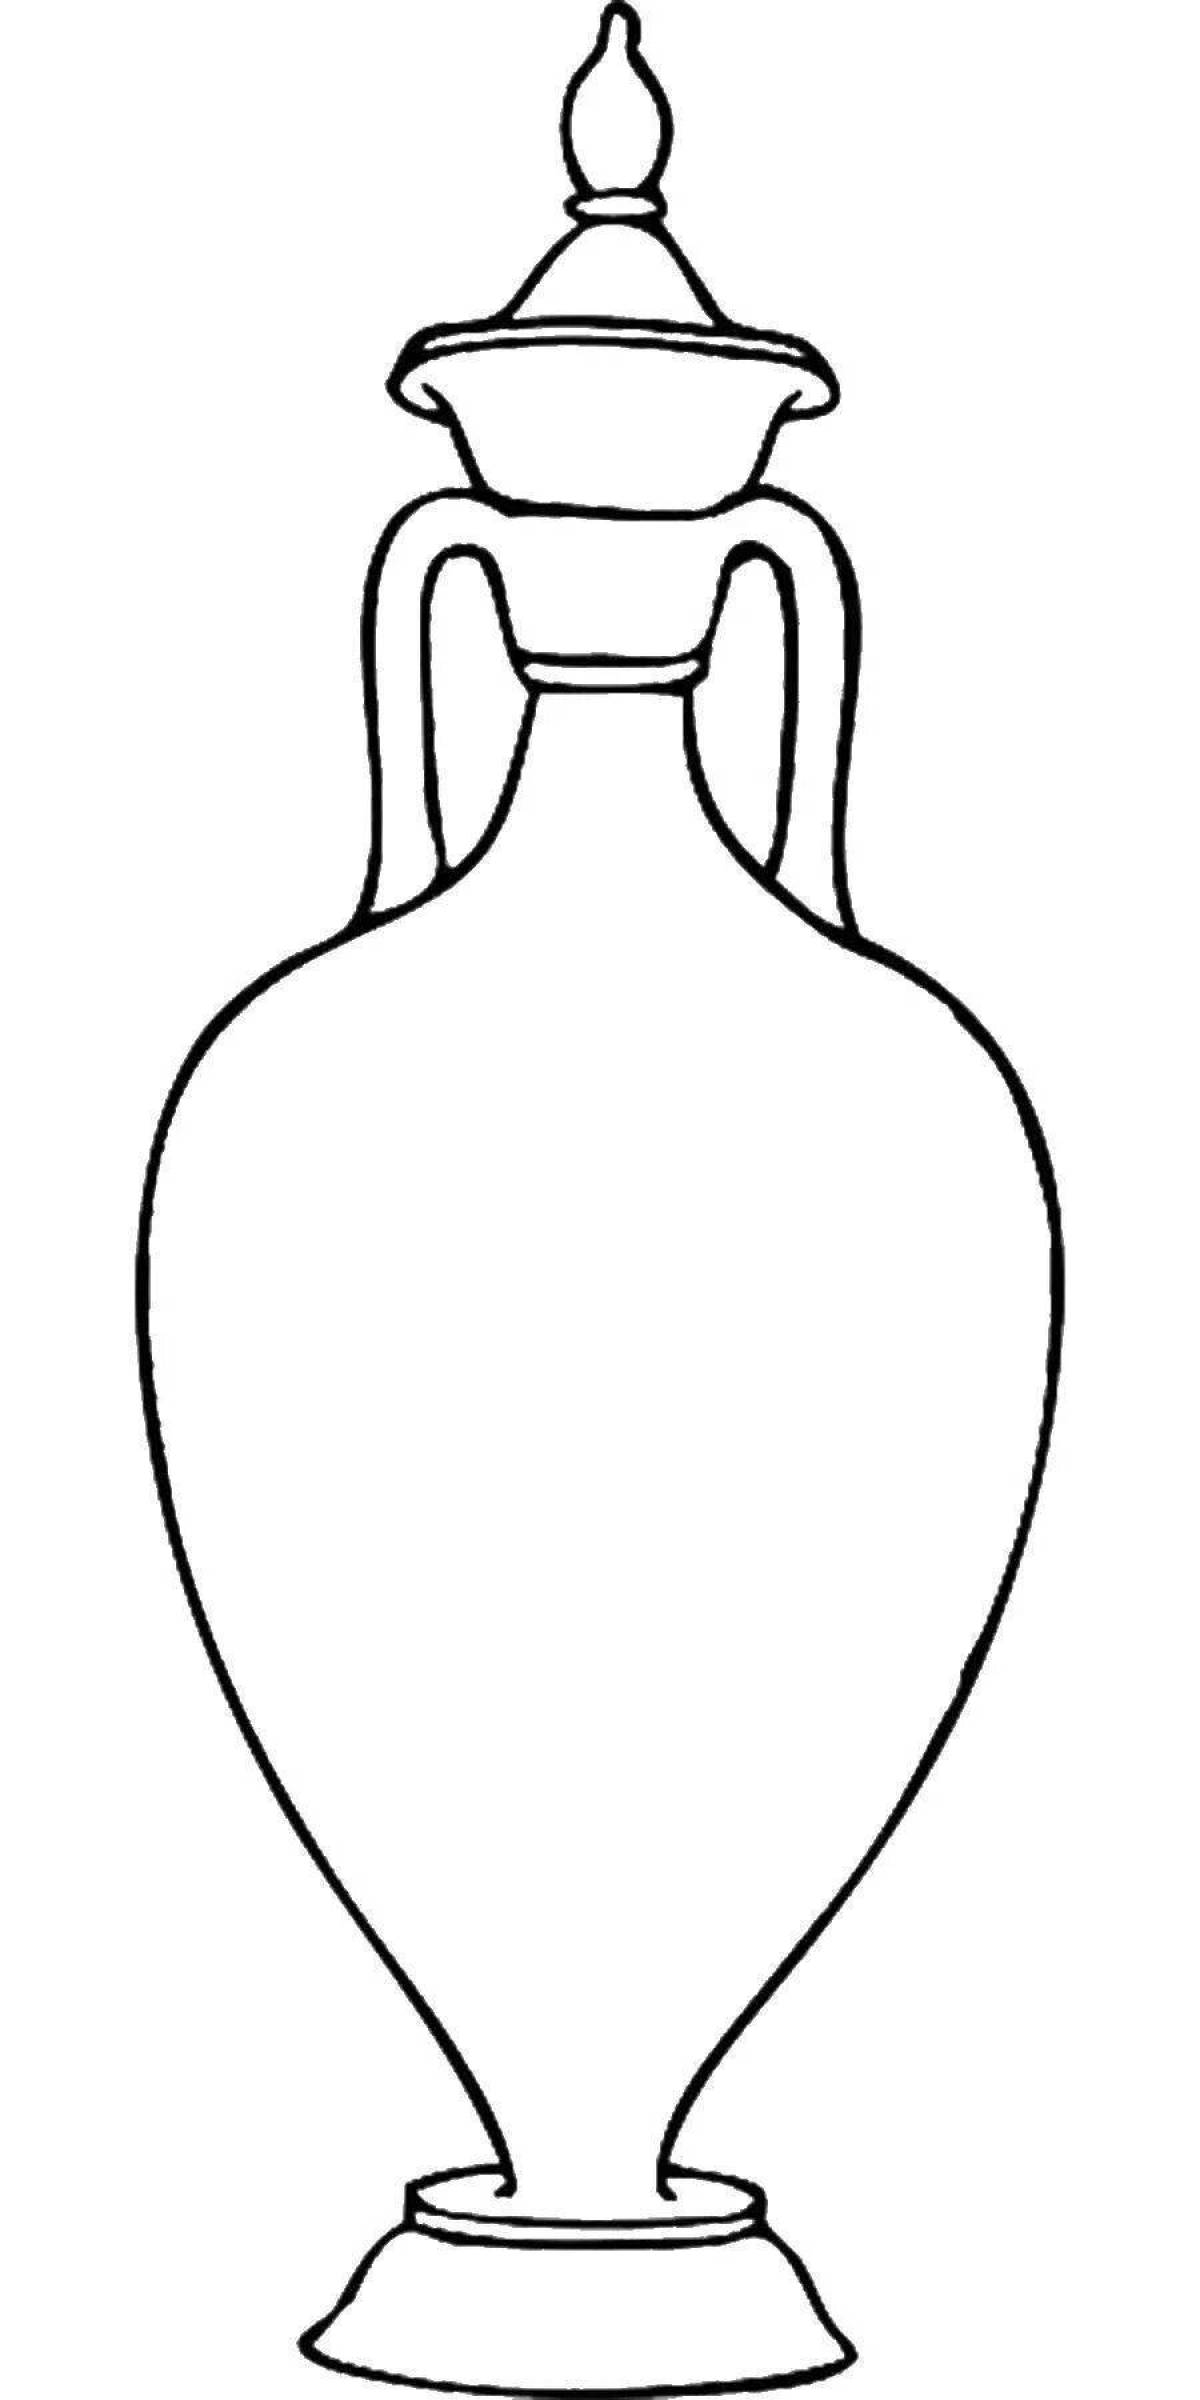 Контур вазы с рисунком